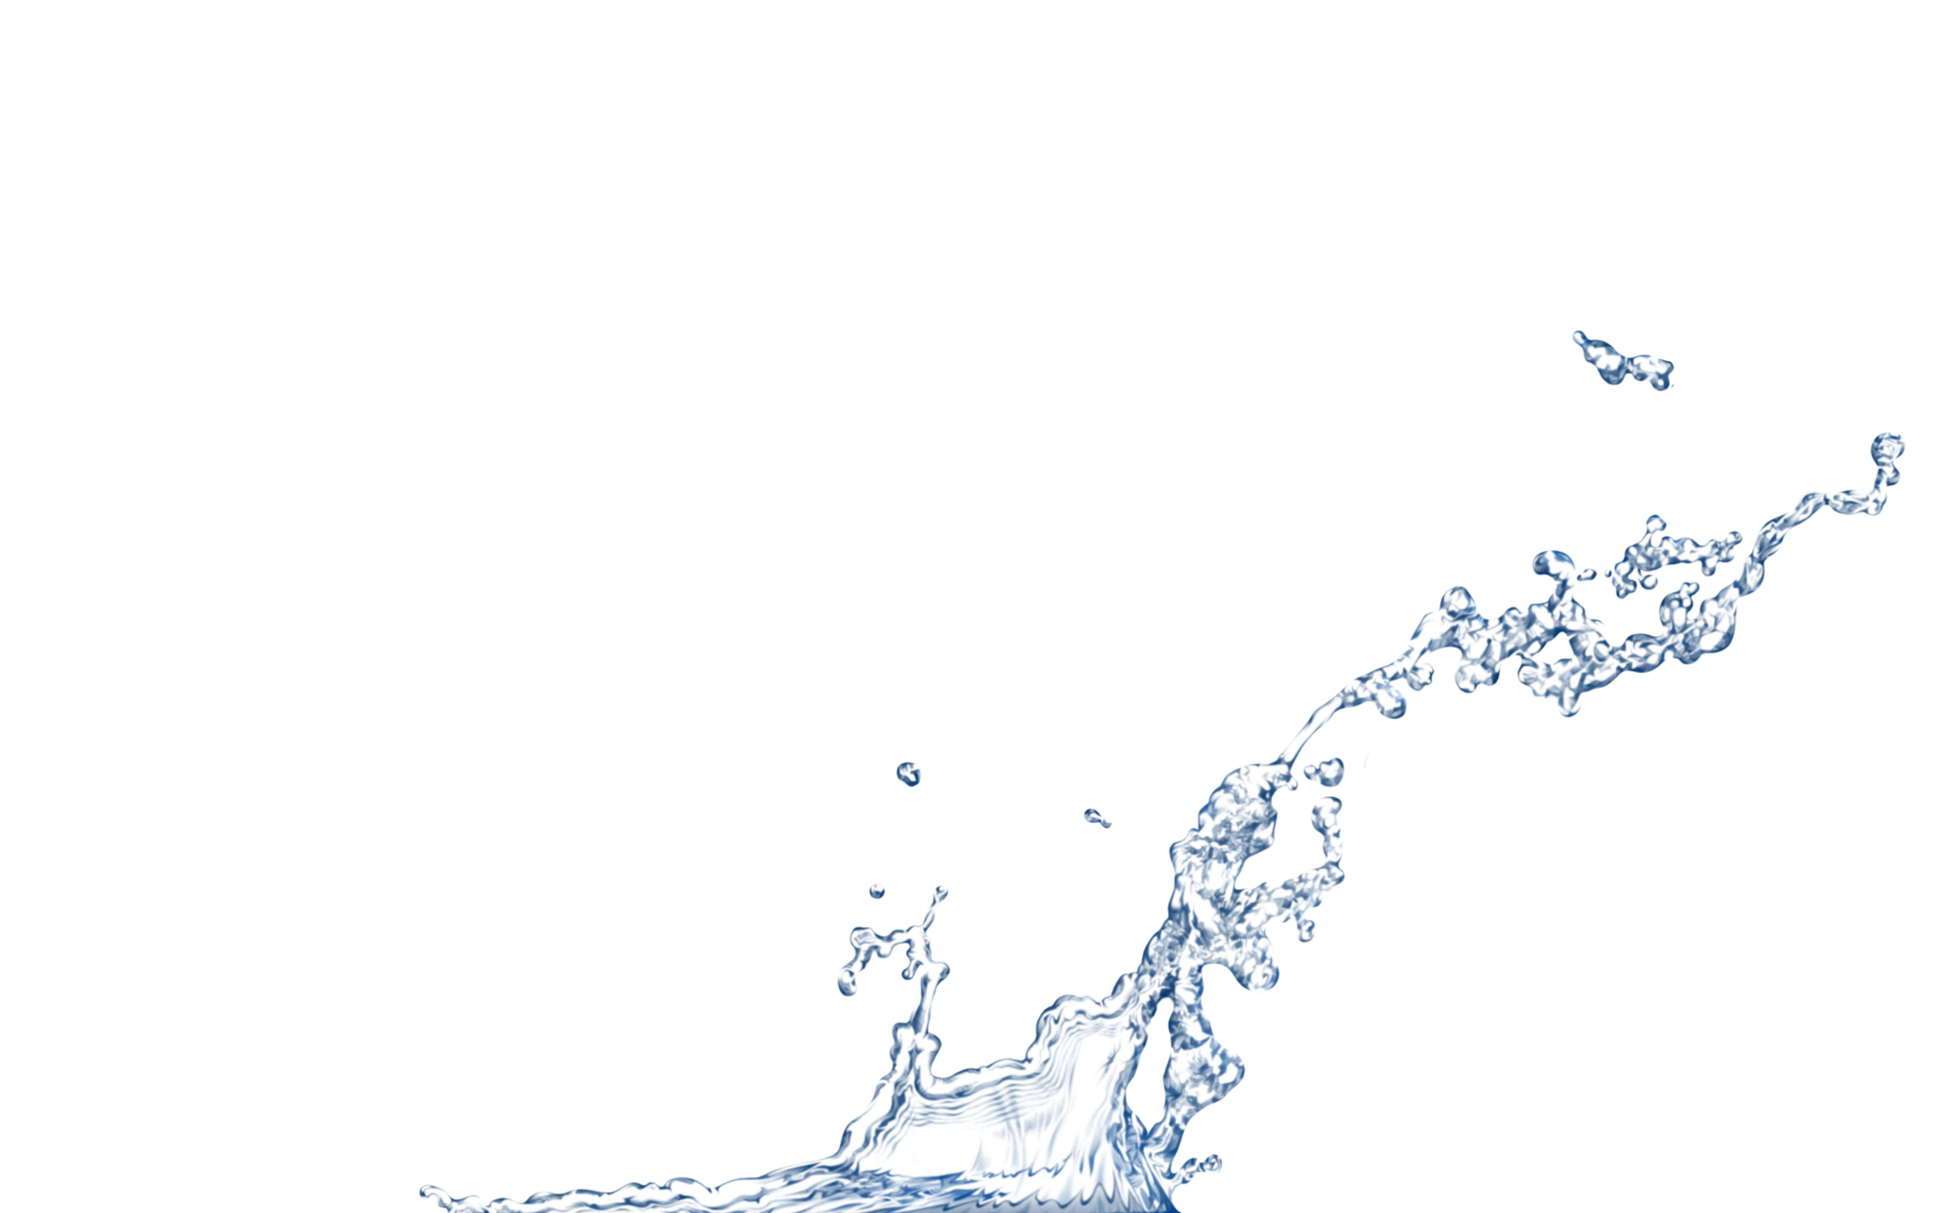 Water PNG image free Download